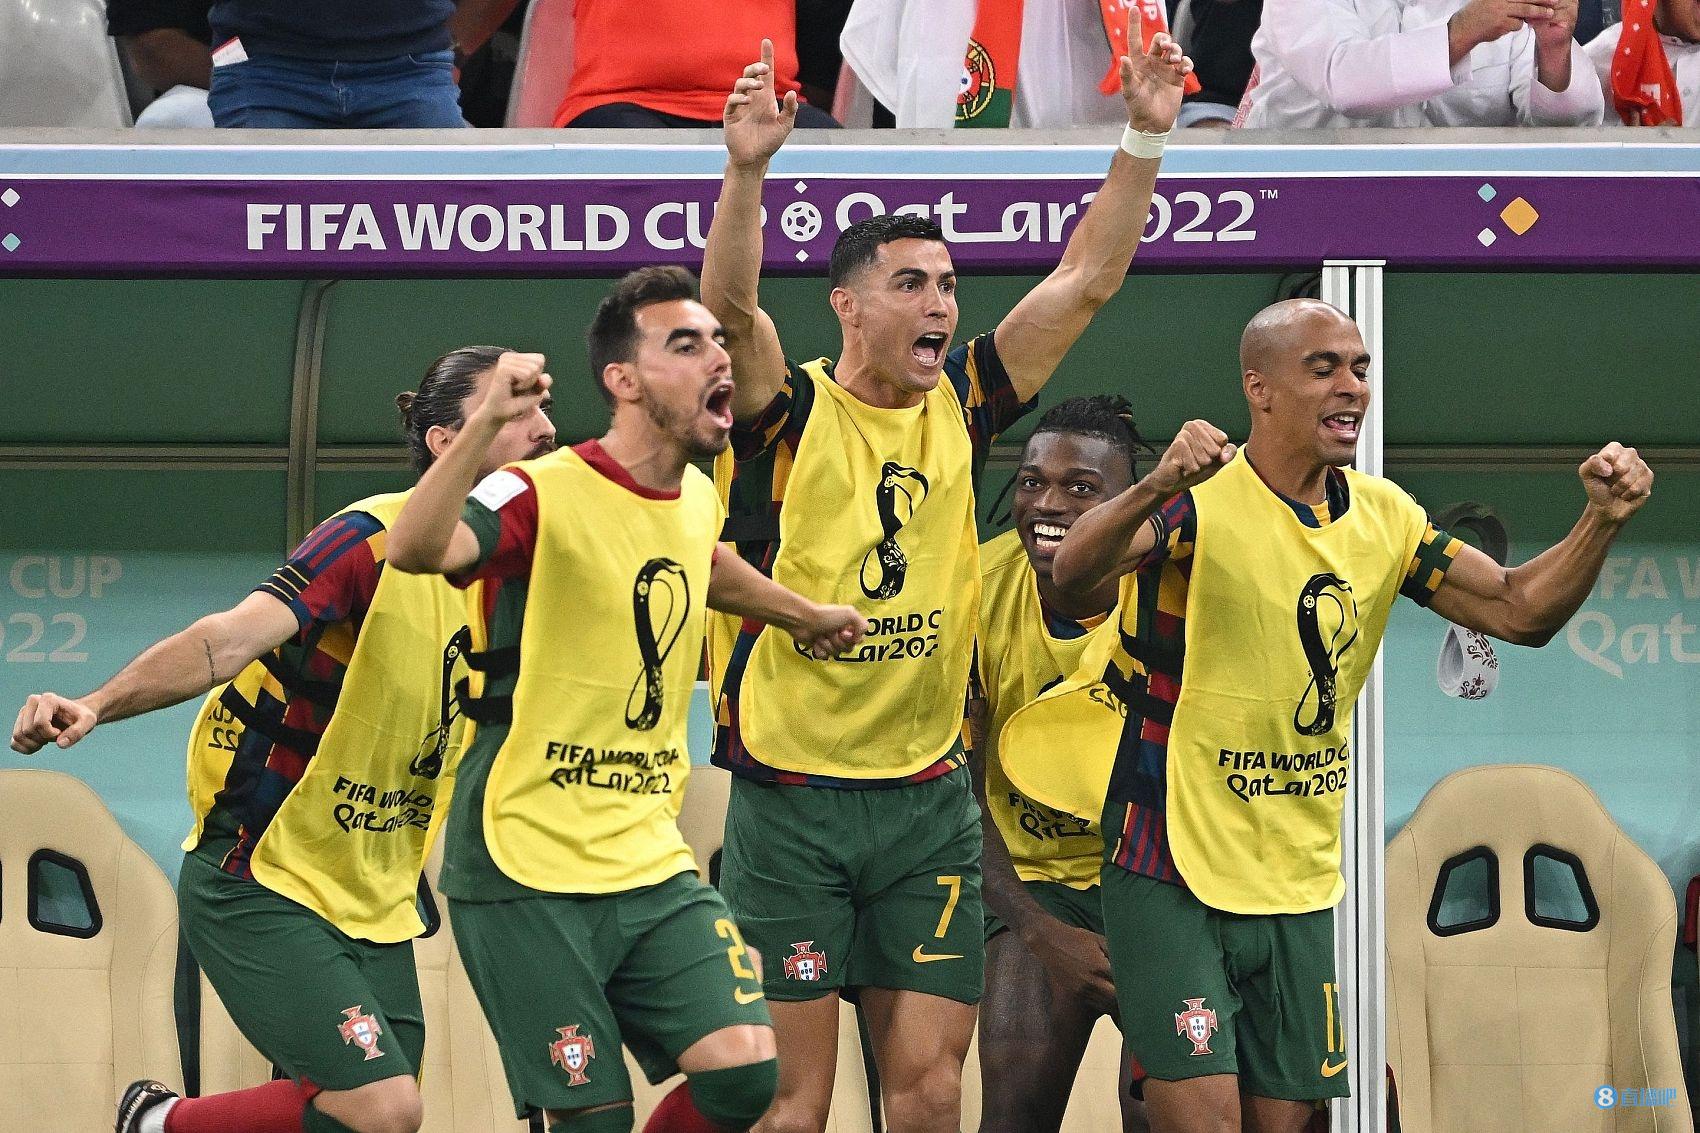 c罗夺过几次欧洲杯冠军 c罗带领的葡萄牙世界杯最多第几 c罗葡萄牙世界杯最好成绩 c罗拿过几次世界杯冠军 C罗两次晋级世界杯8强，葡萄牙历史首人